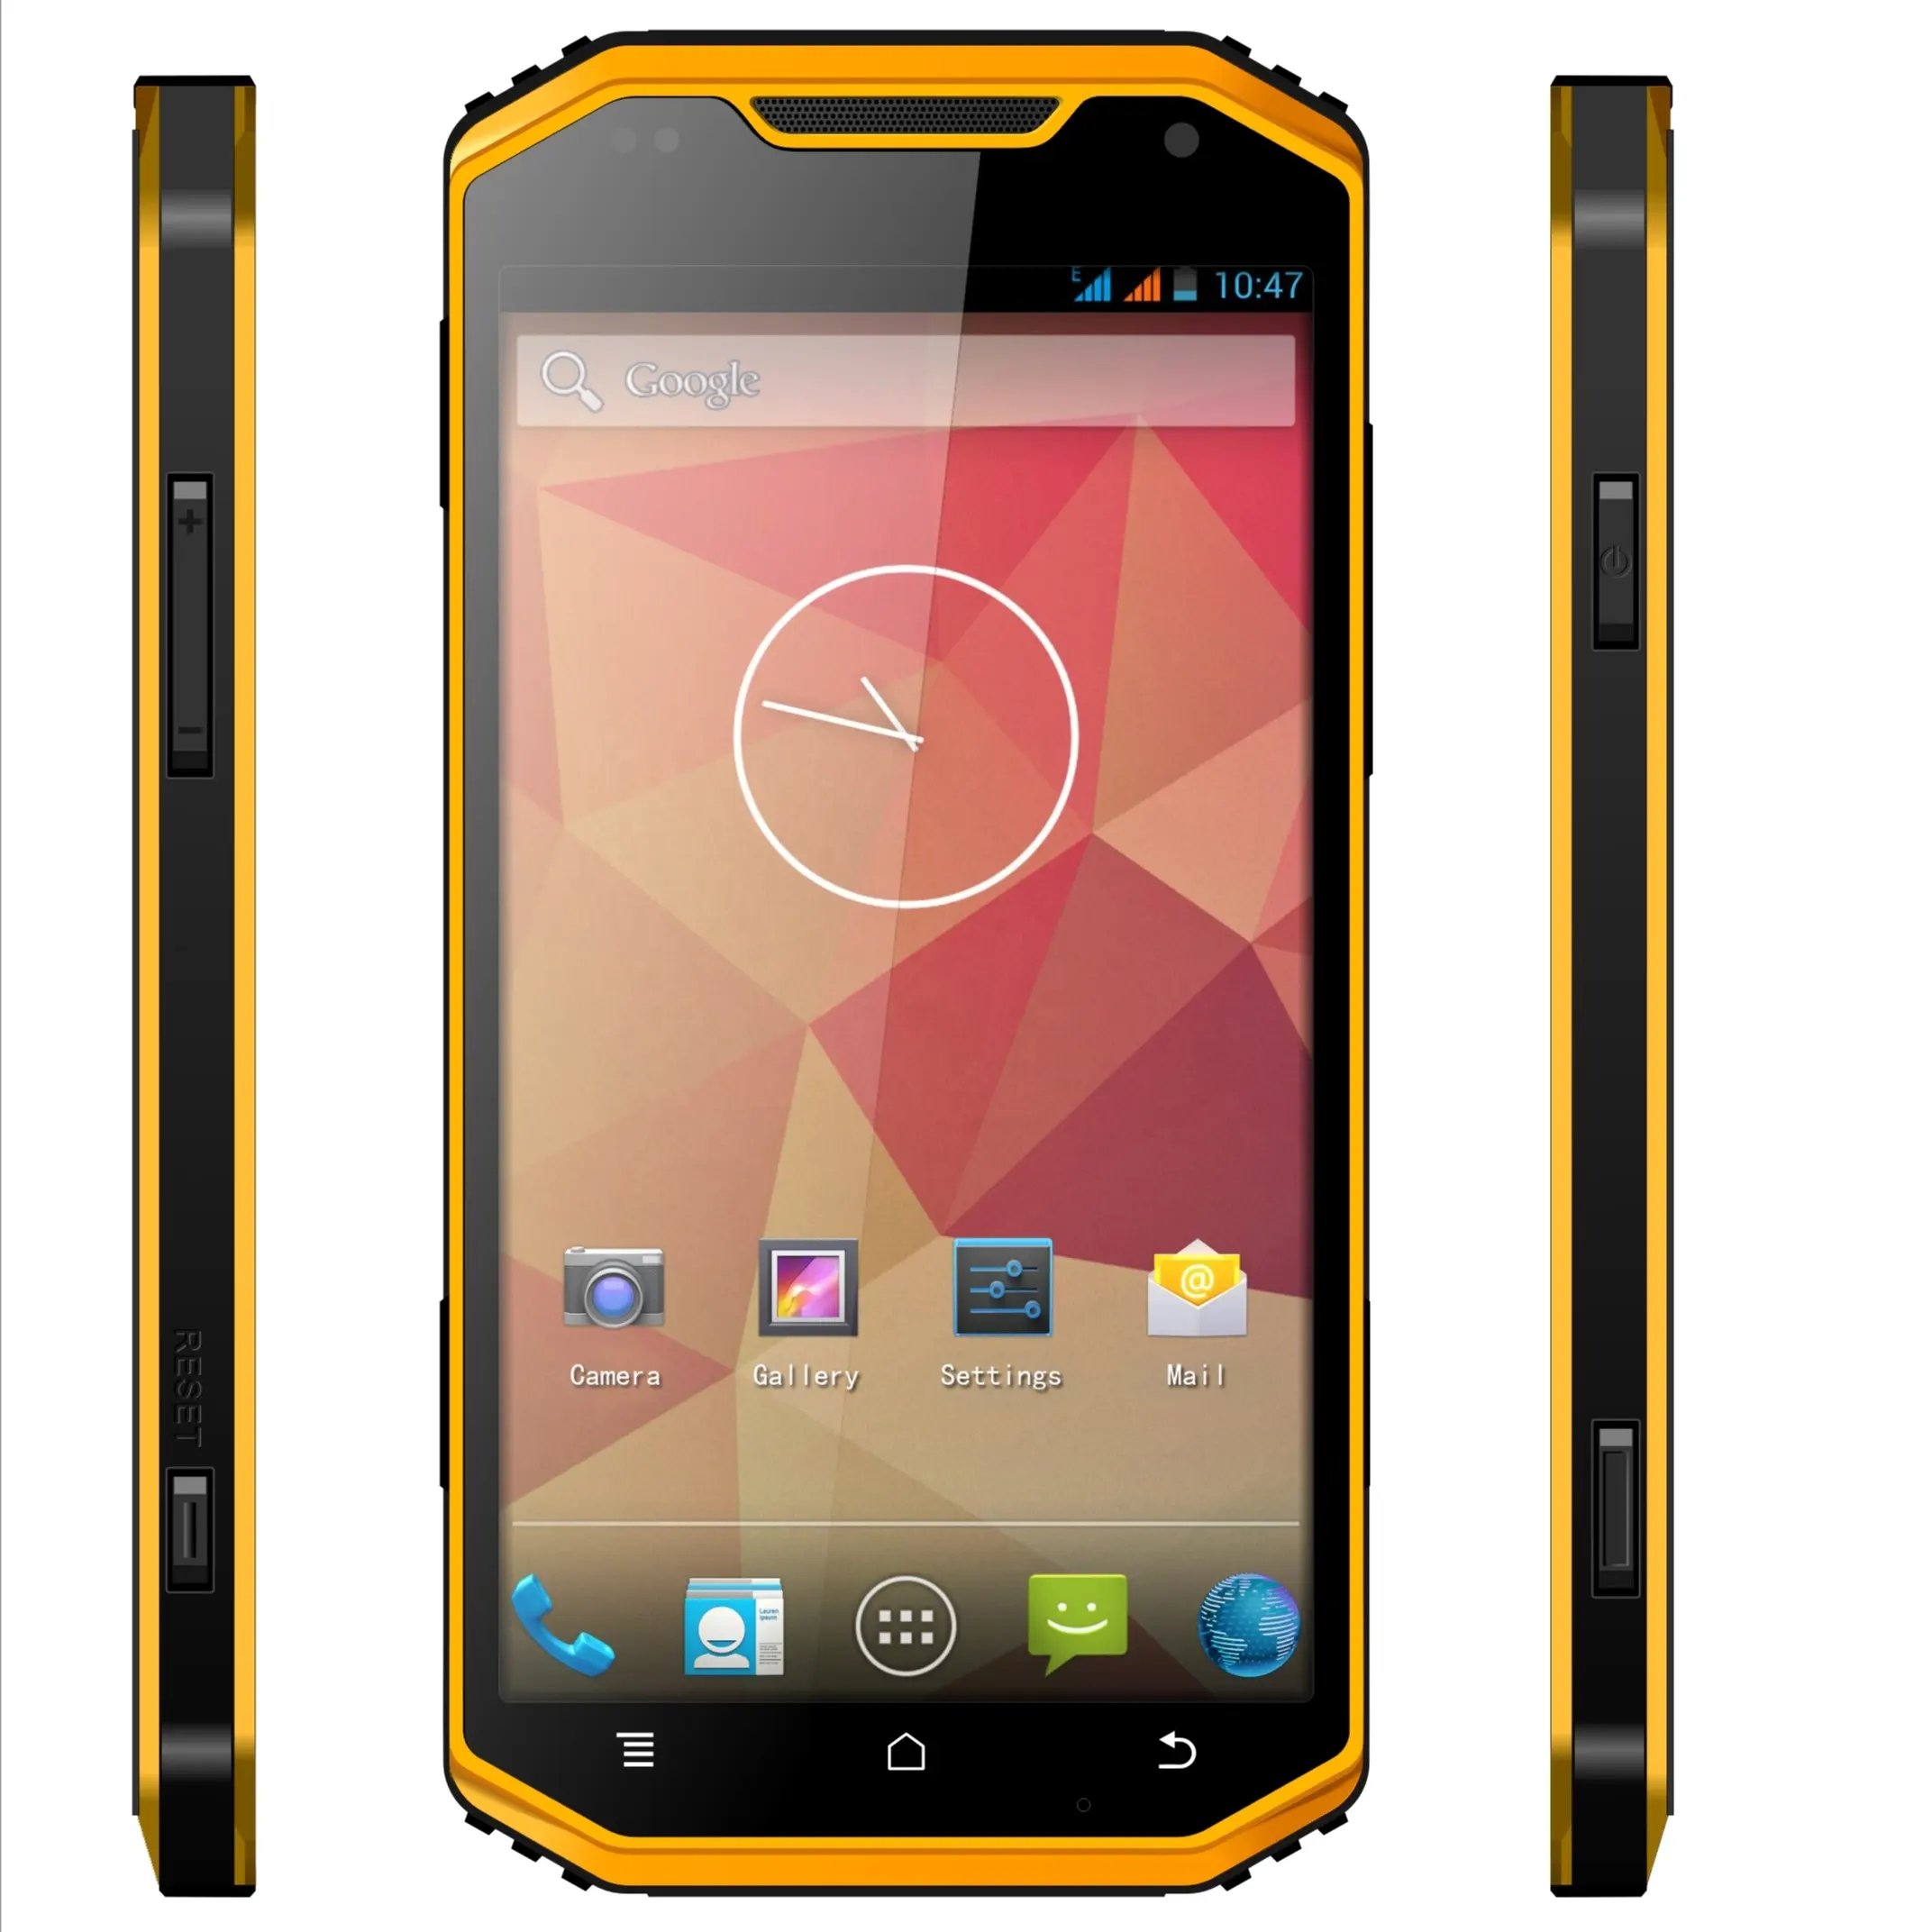 H20 Sommergibile Android 4.2 Quad core IP68 Grado del telefono mobile (Saral S-Nota)